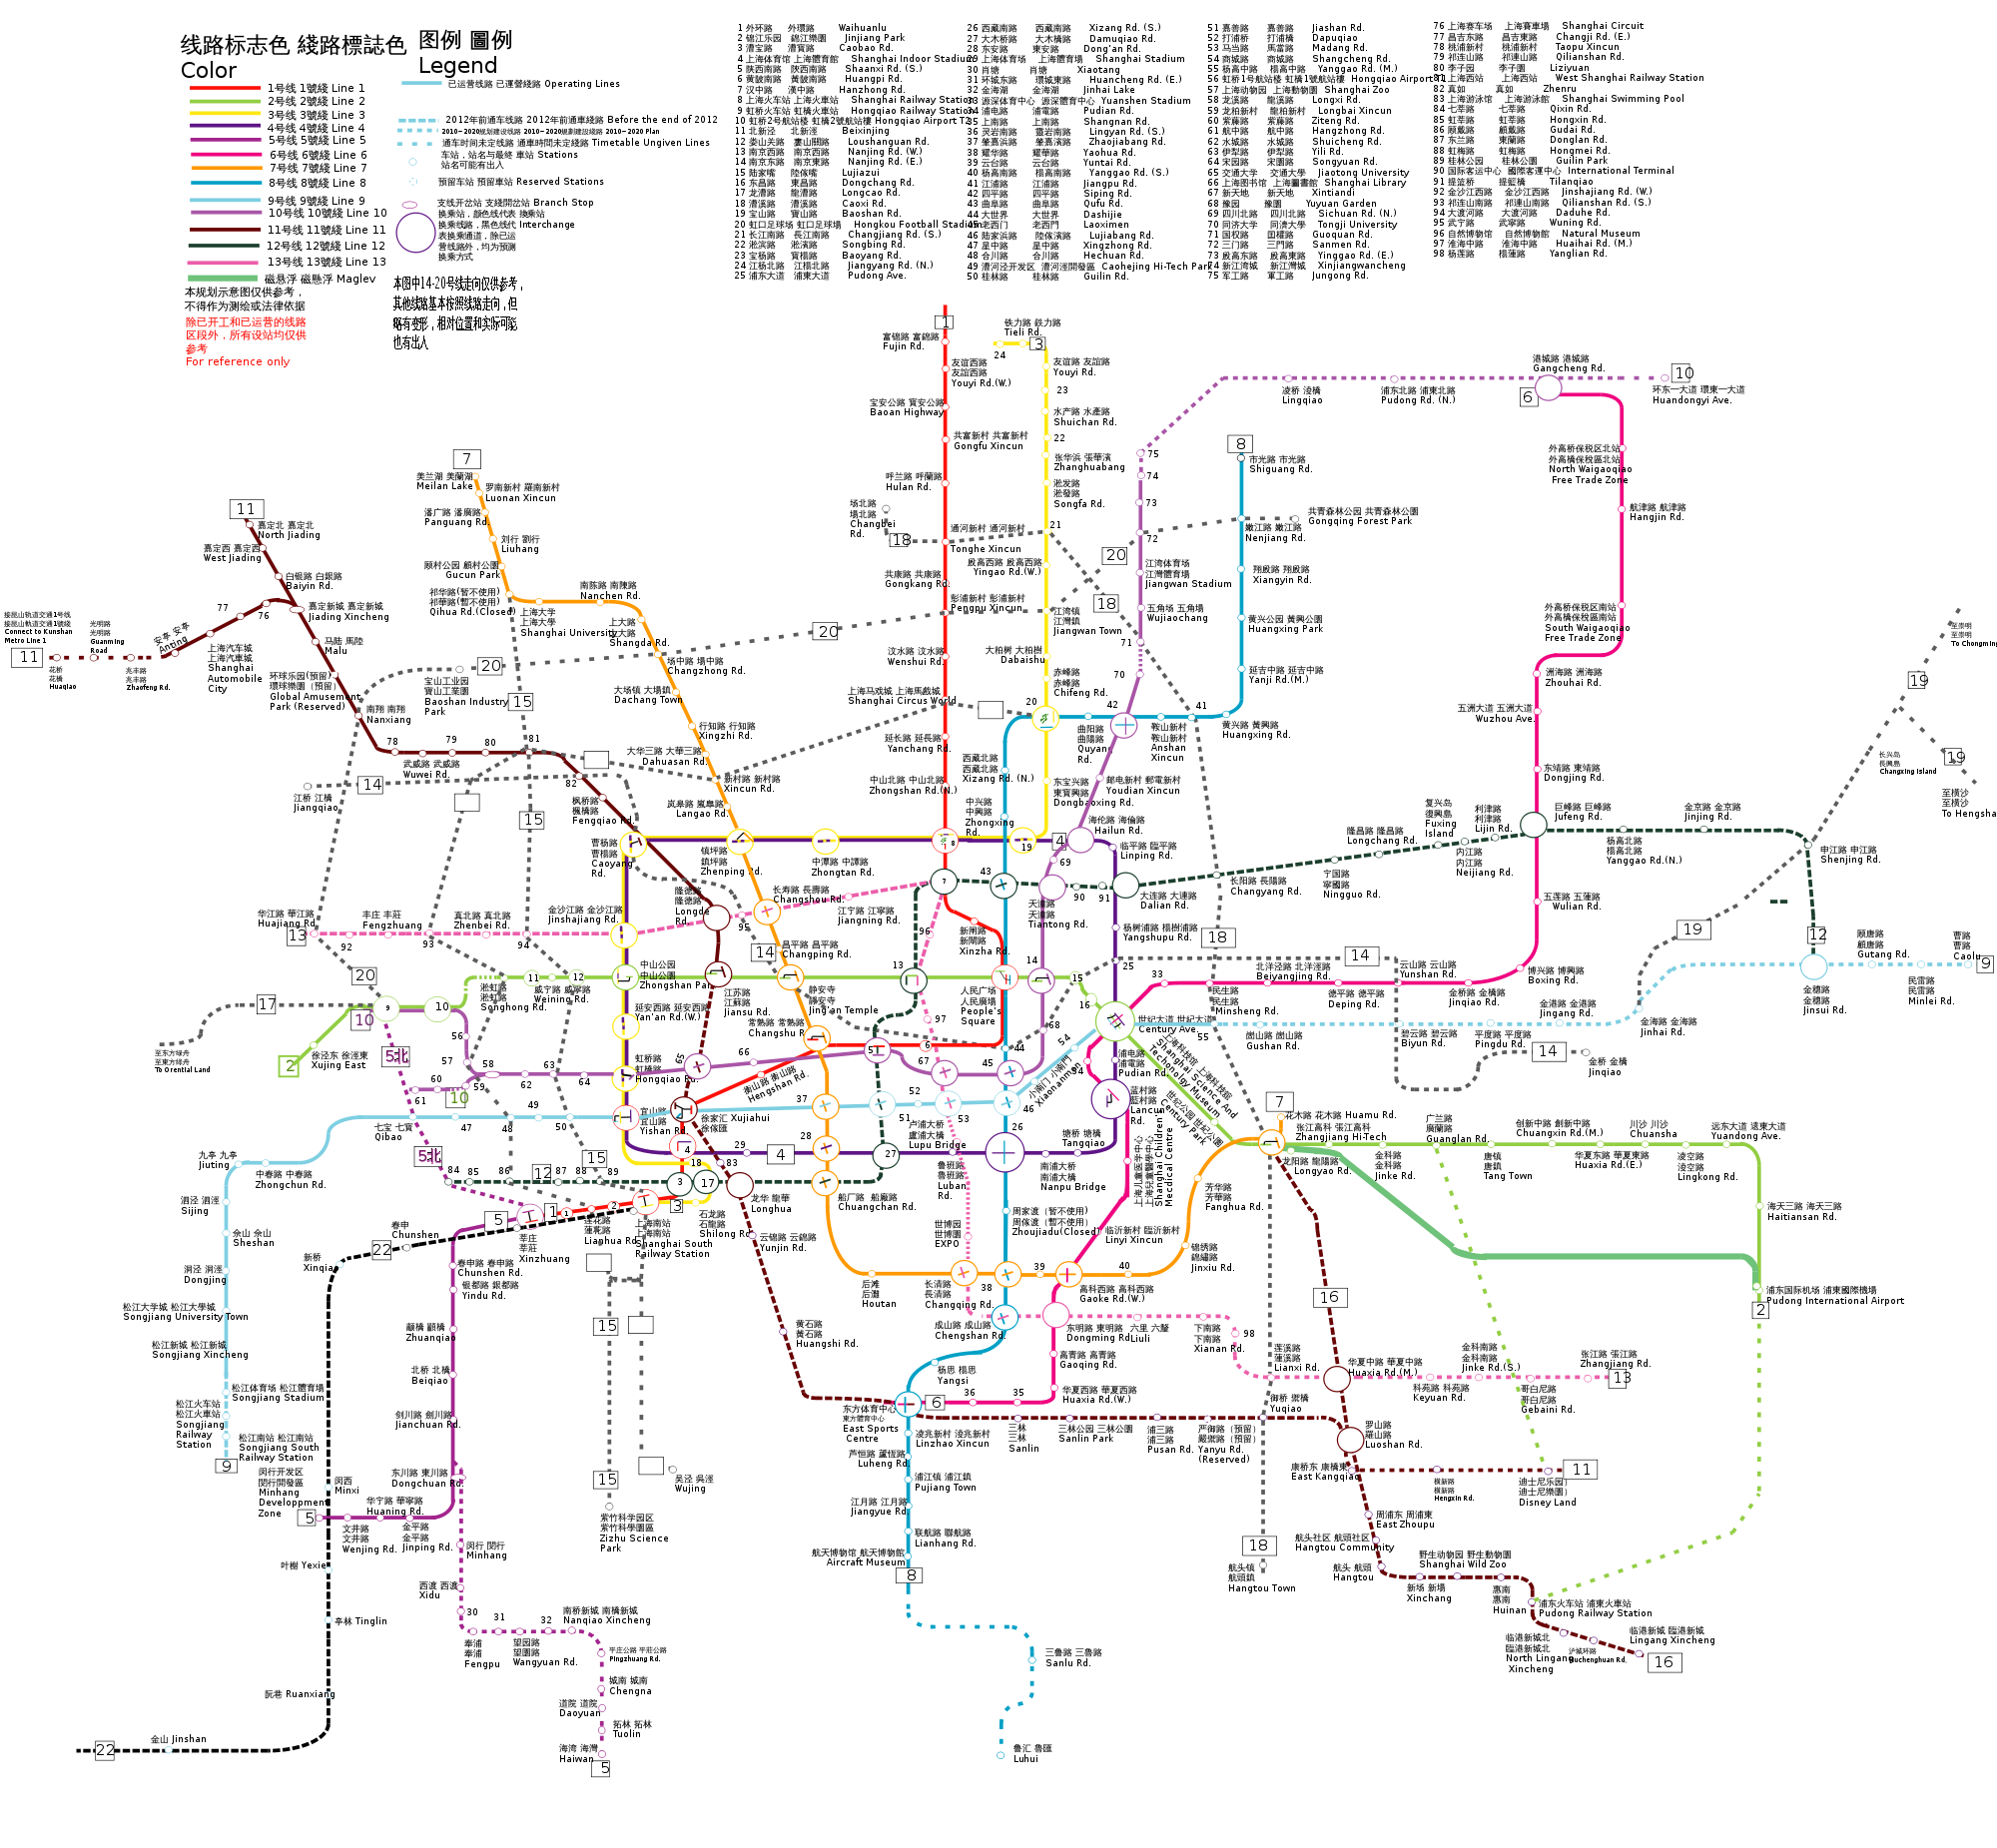 Ausbau der Metro Shanghai bis 2020